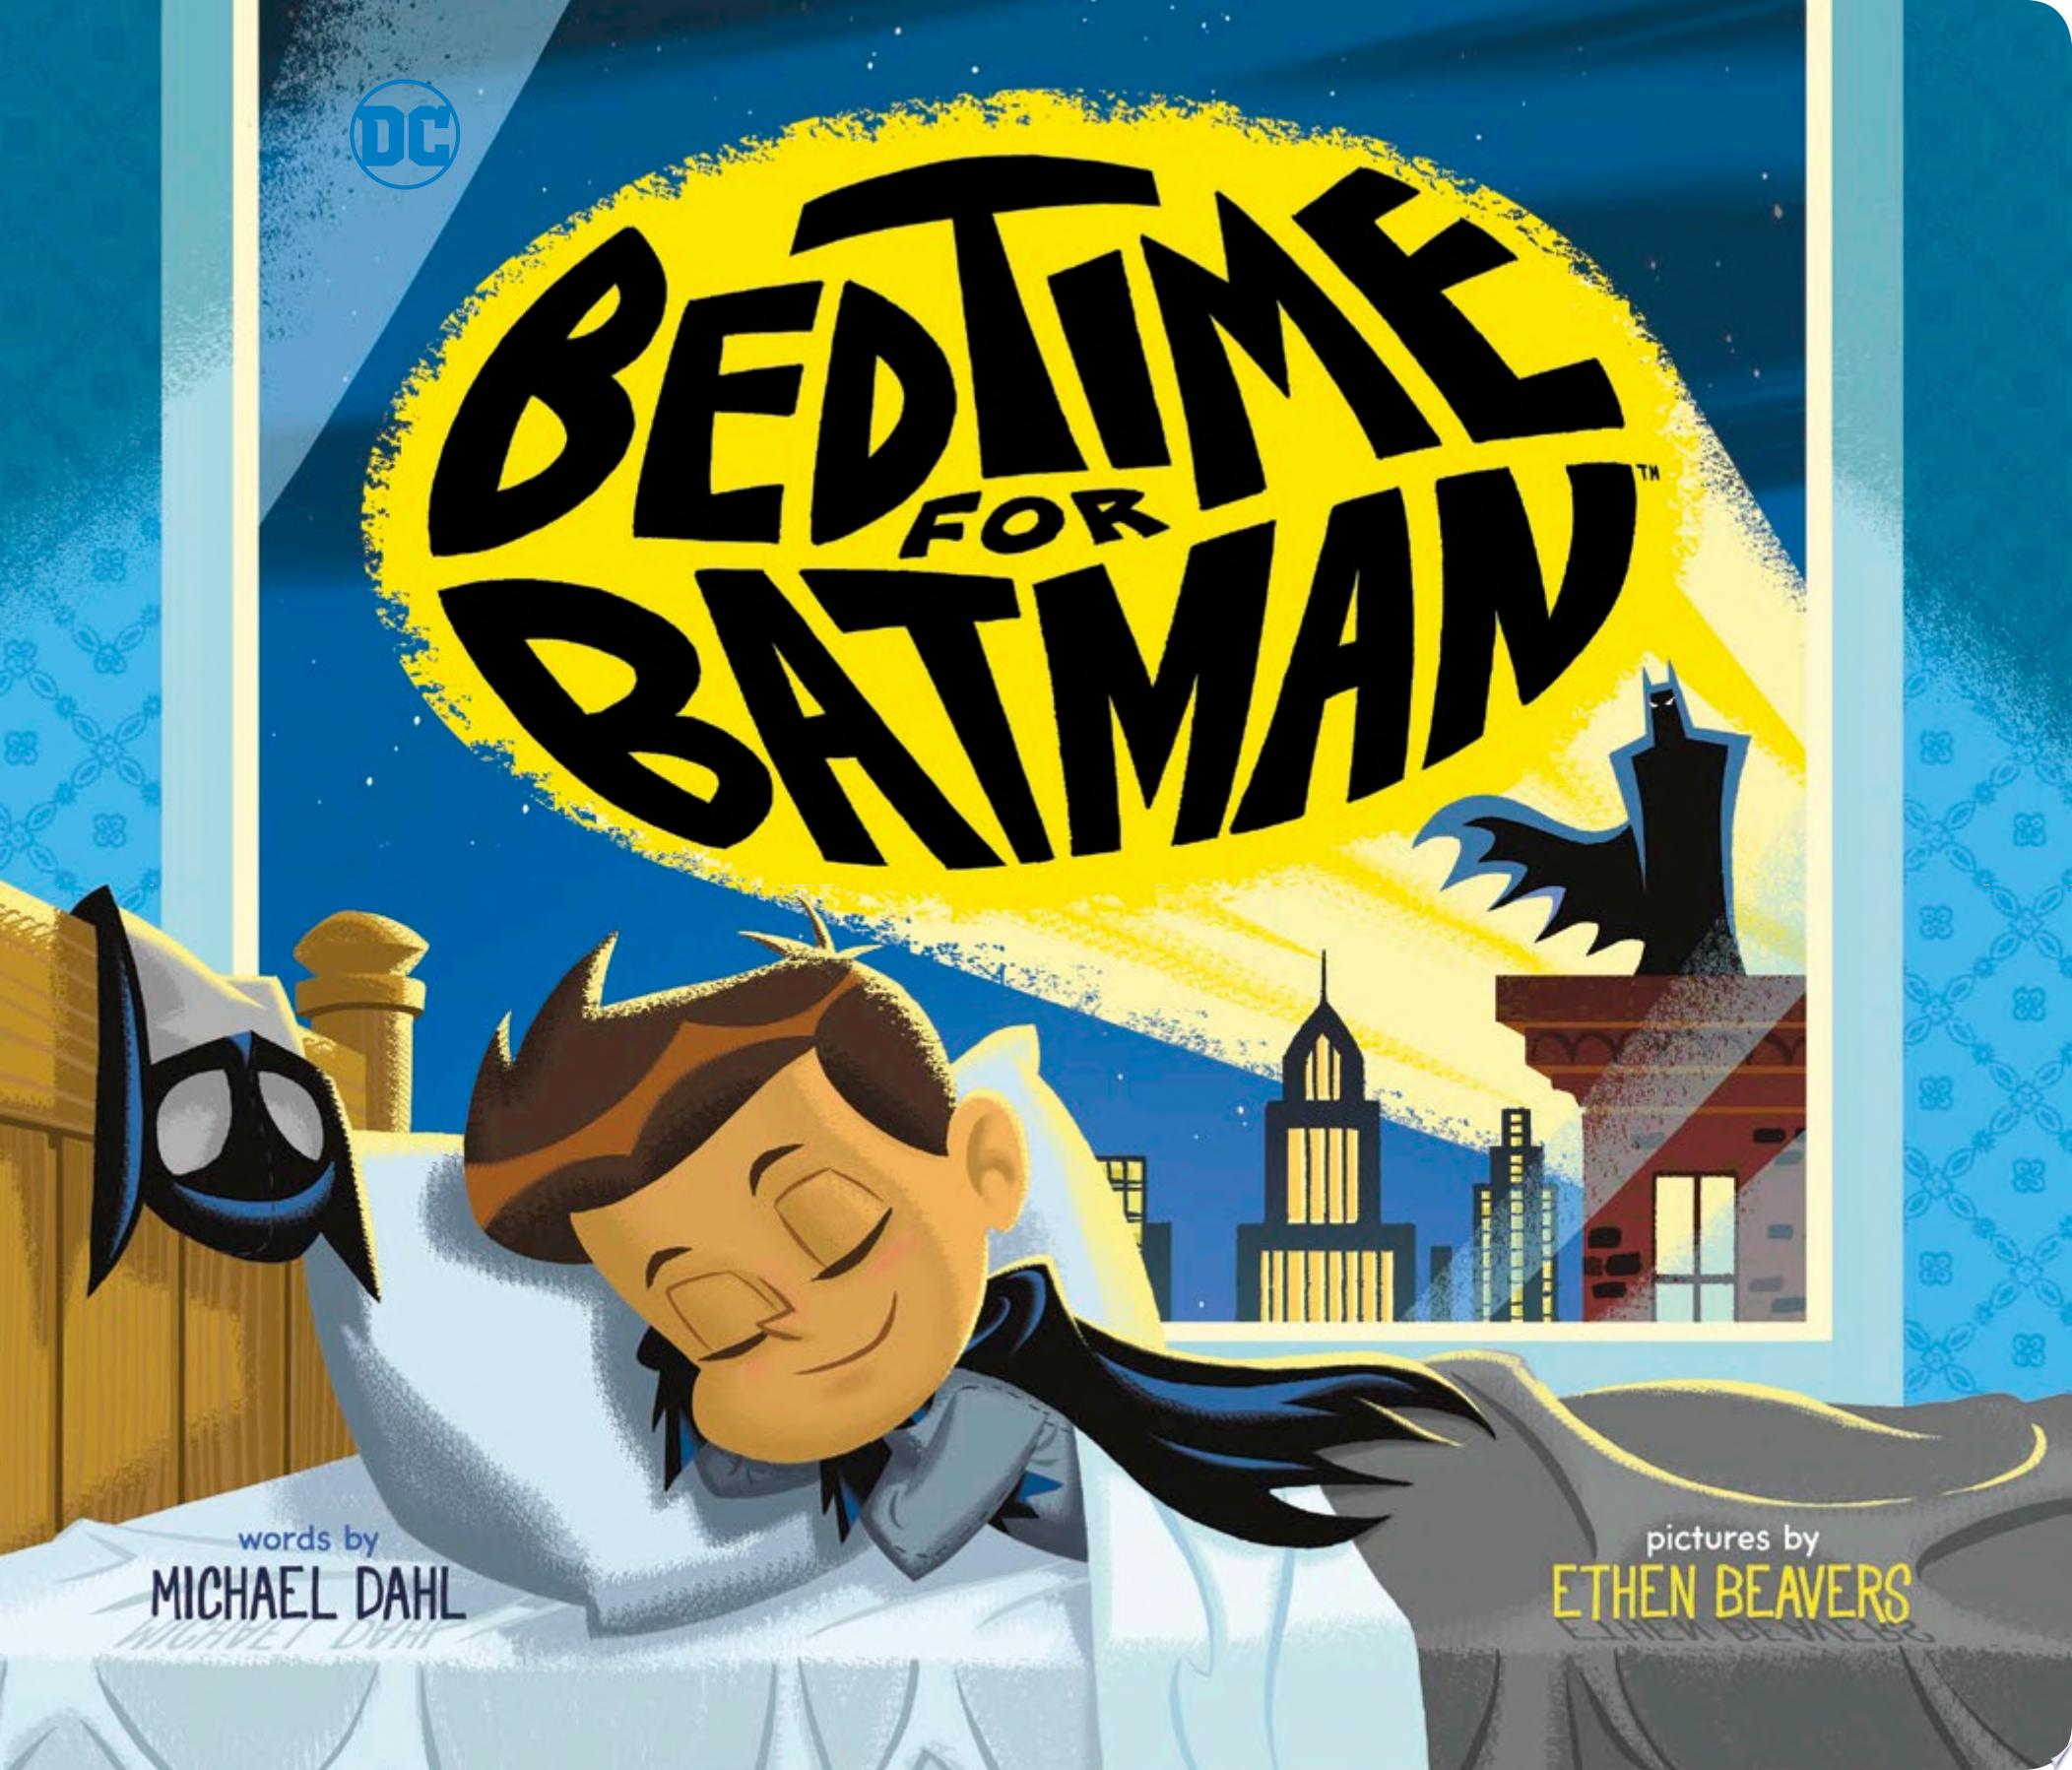 Image for "Bedtime for Batman"